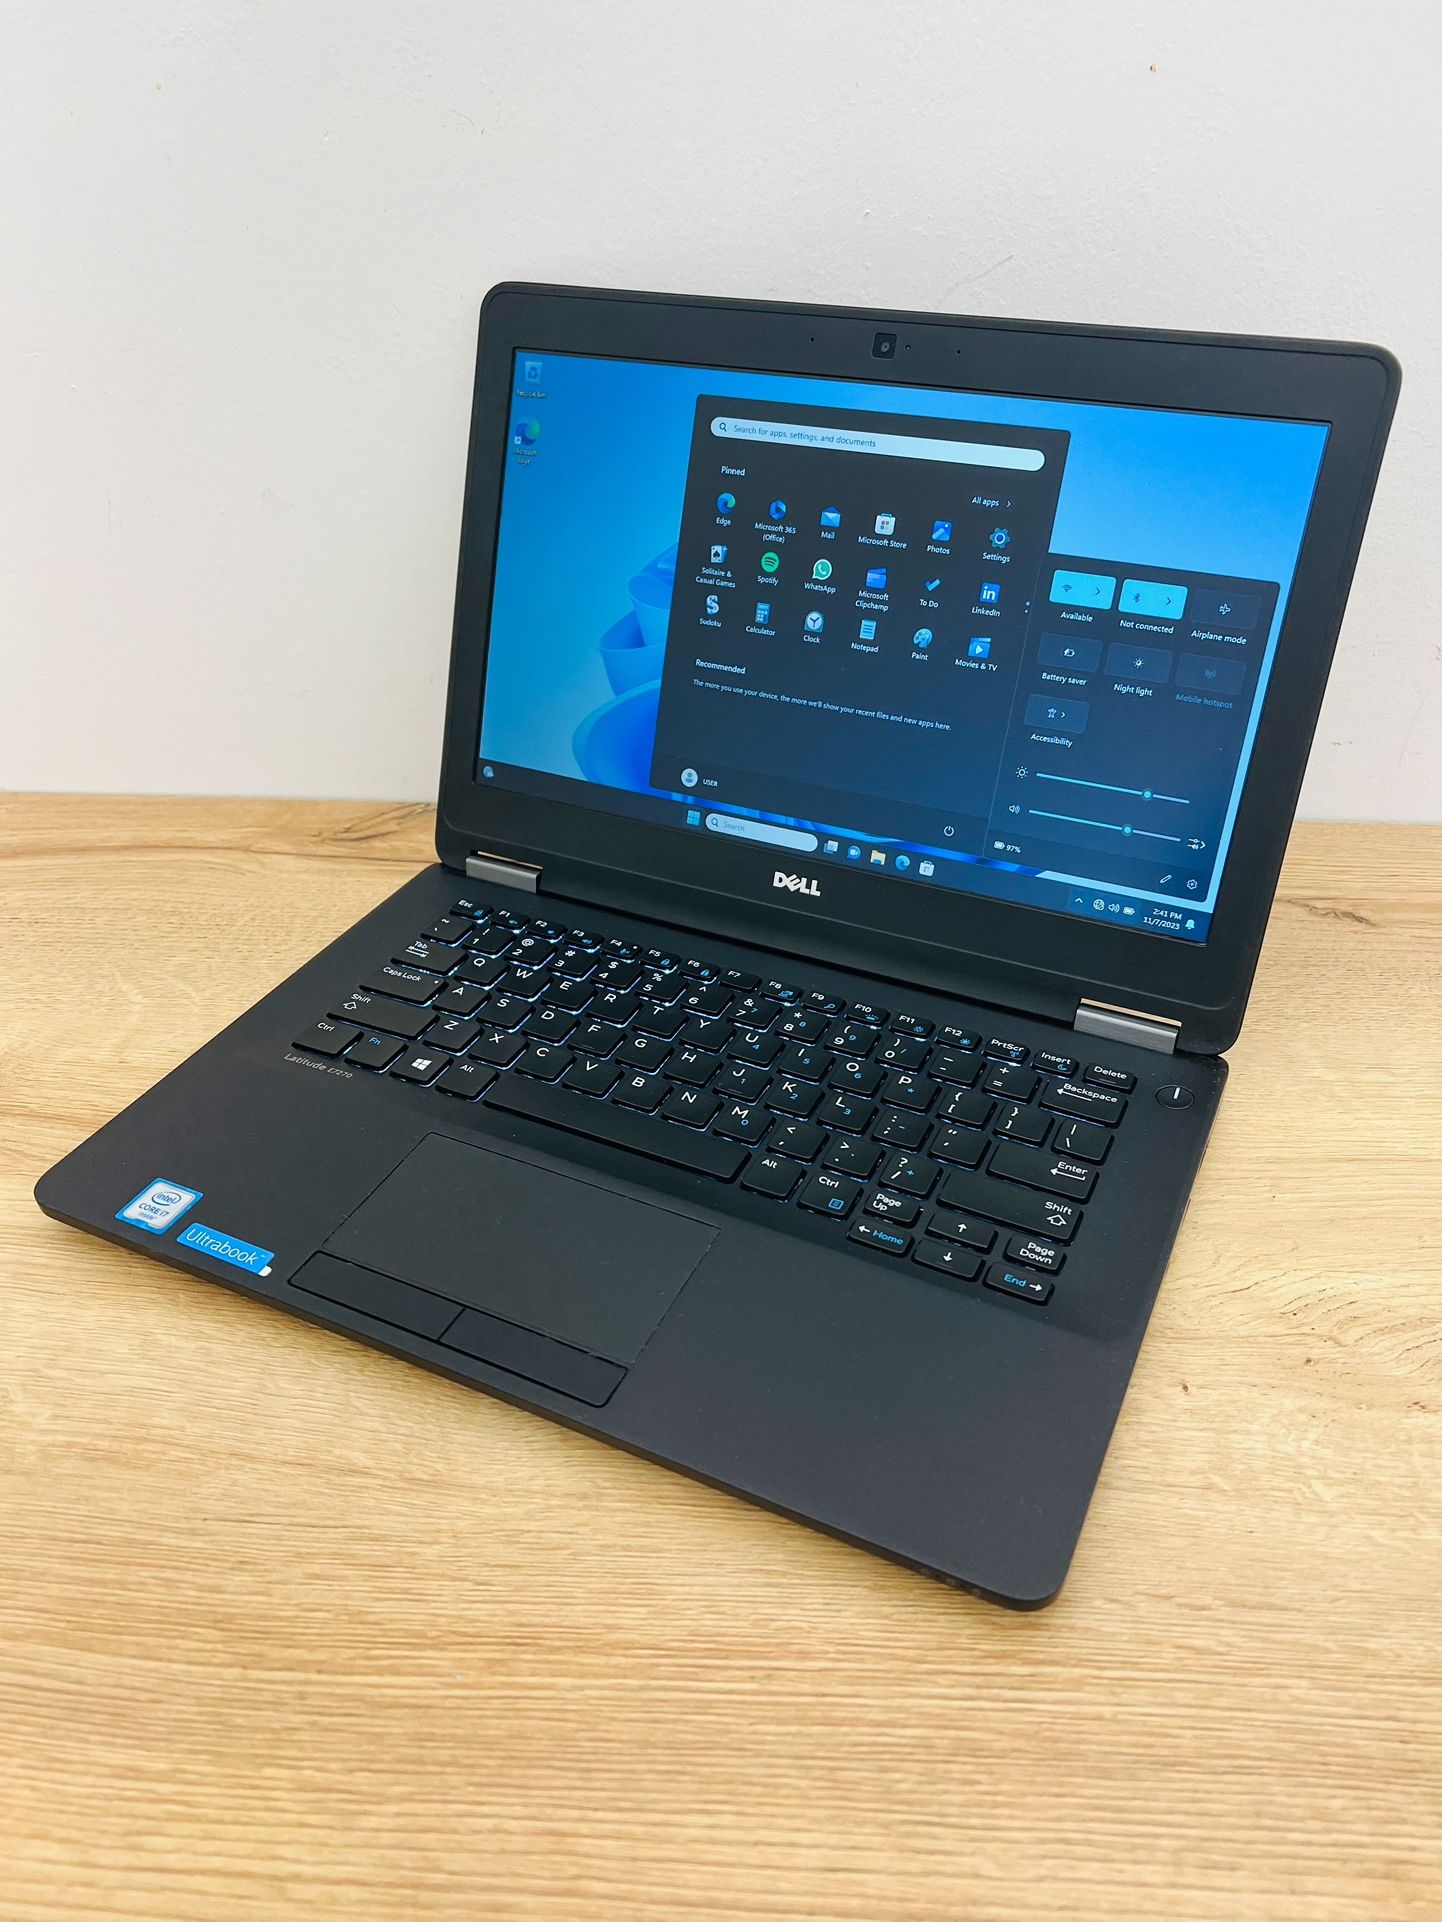 Dell i7 UltraBook Business Laptop / Windows 11 Pro / SSD / WiFi AC / Camera / HDMI / Bluetooth / Backlit